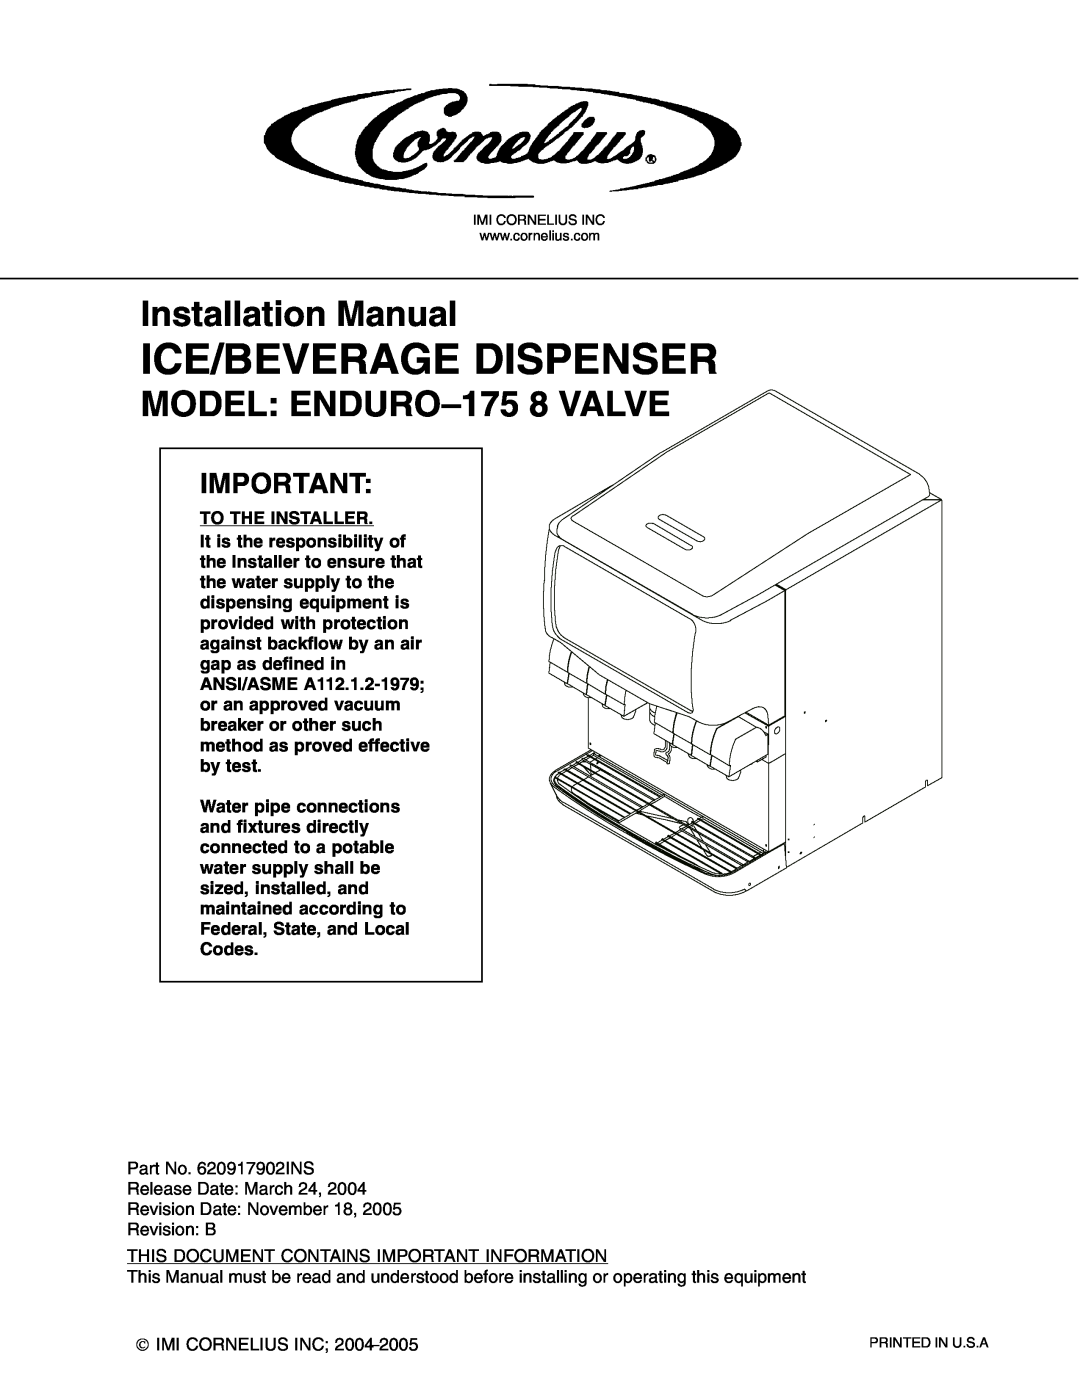 Cornelius installation manual Ice/Beverage Dispenser, Installation Manual, MODEL ENDURO-1758 VALVE 